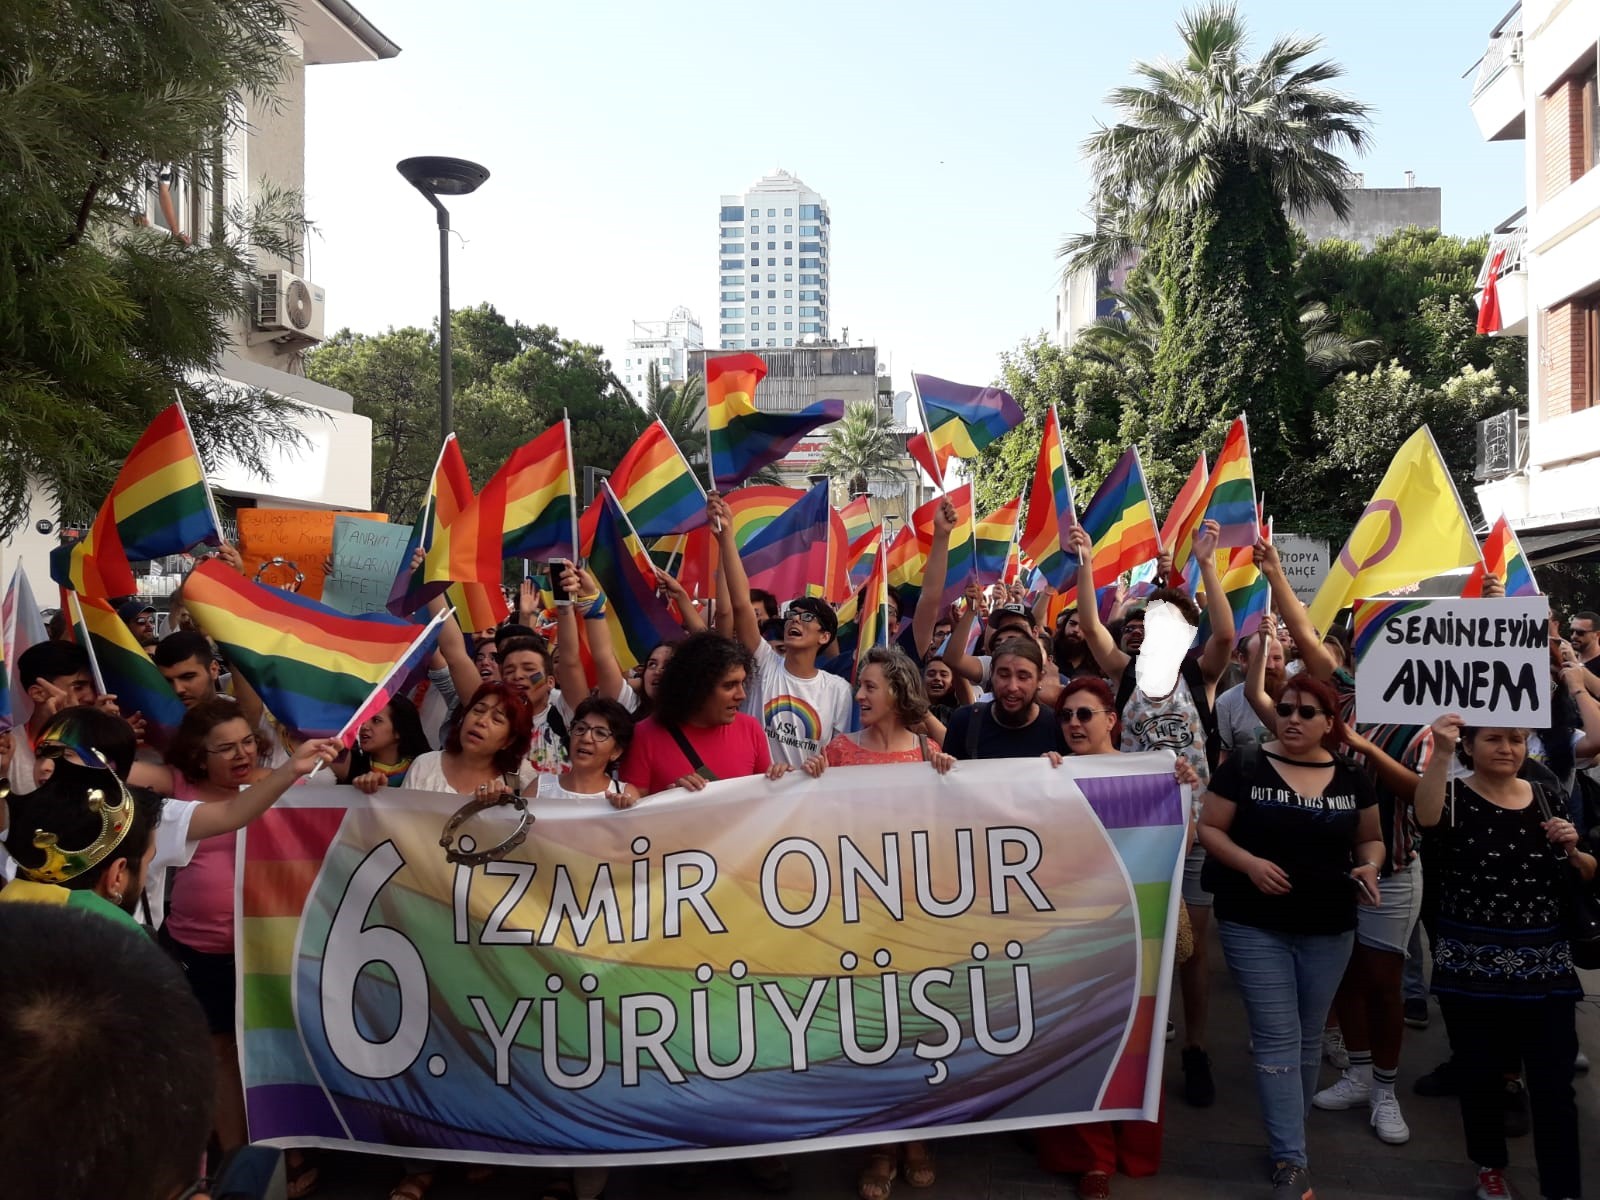 İzmir Onur Yürüyüşü yasağının kaldırılması talebi reddedildi | Kaos GL - LGBTİ+ Haber Portalı